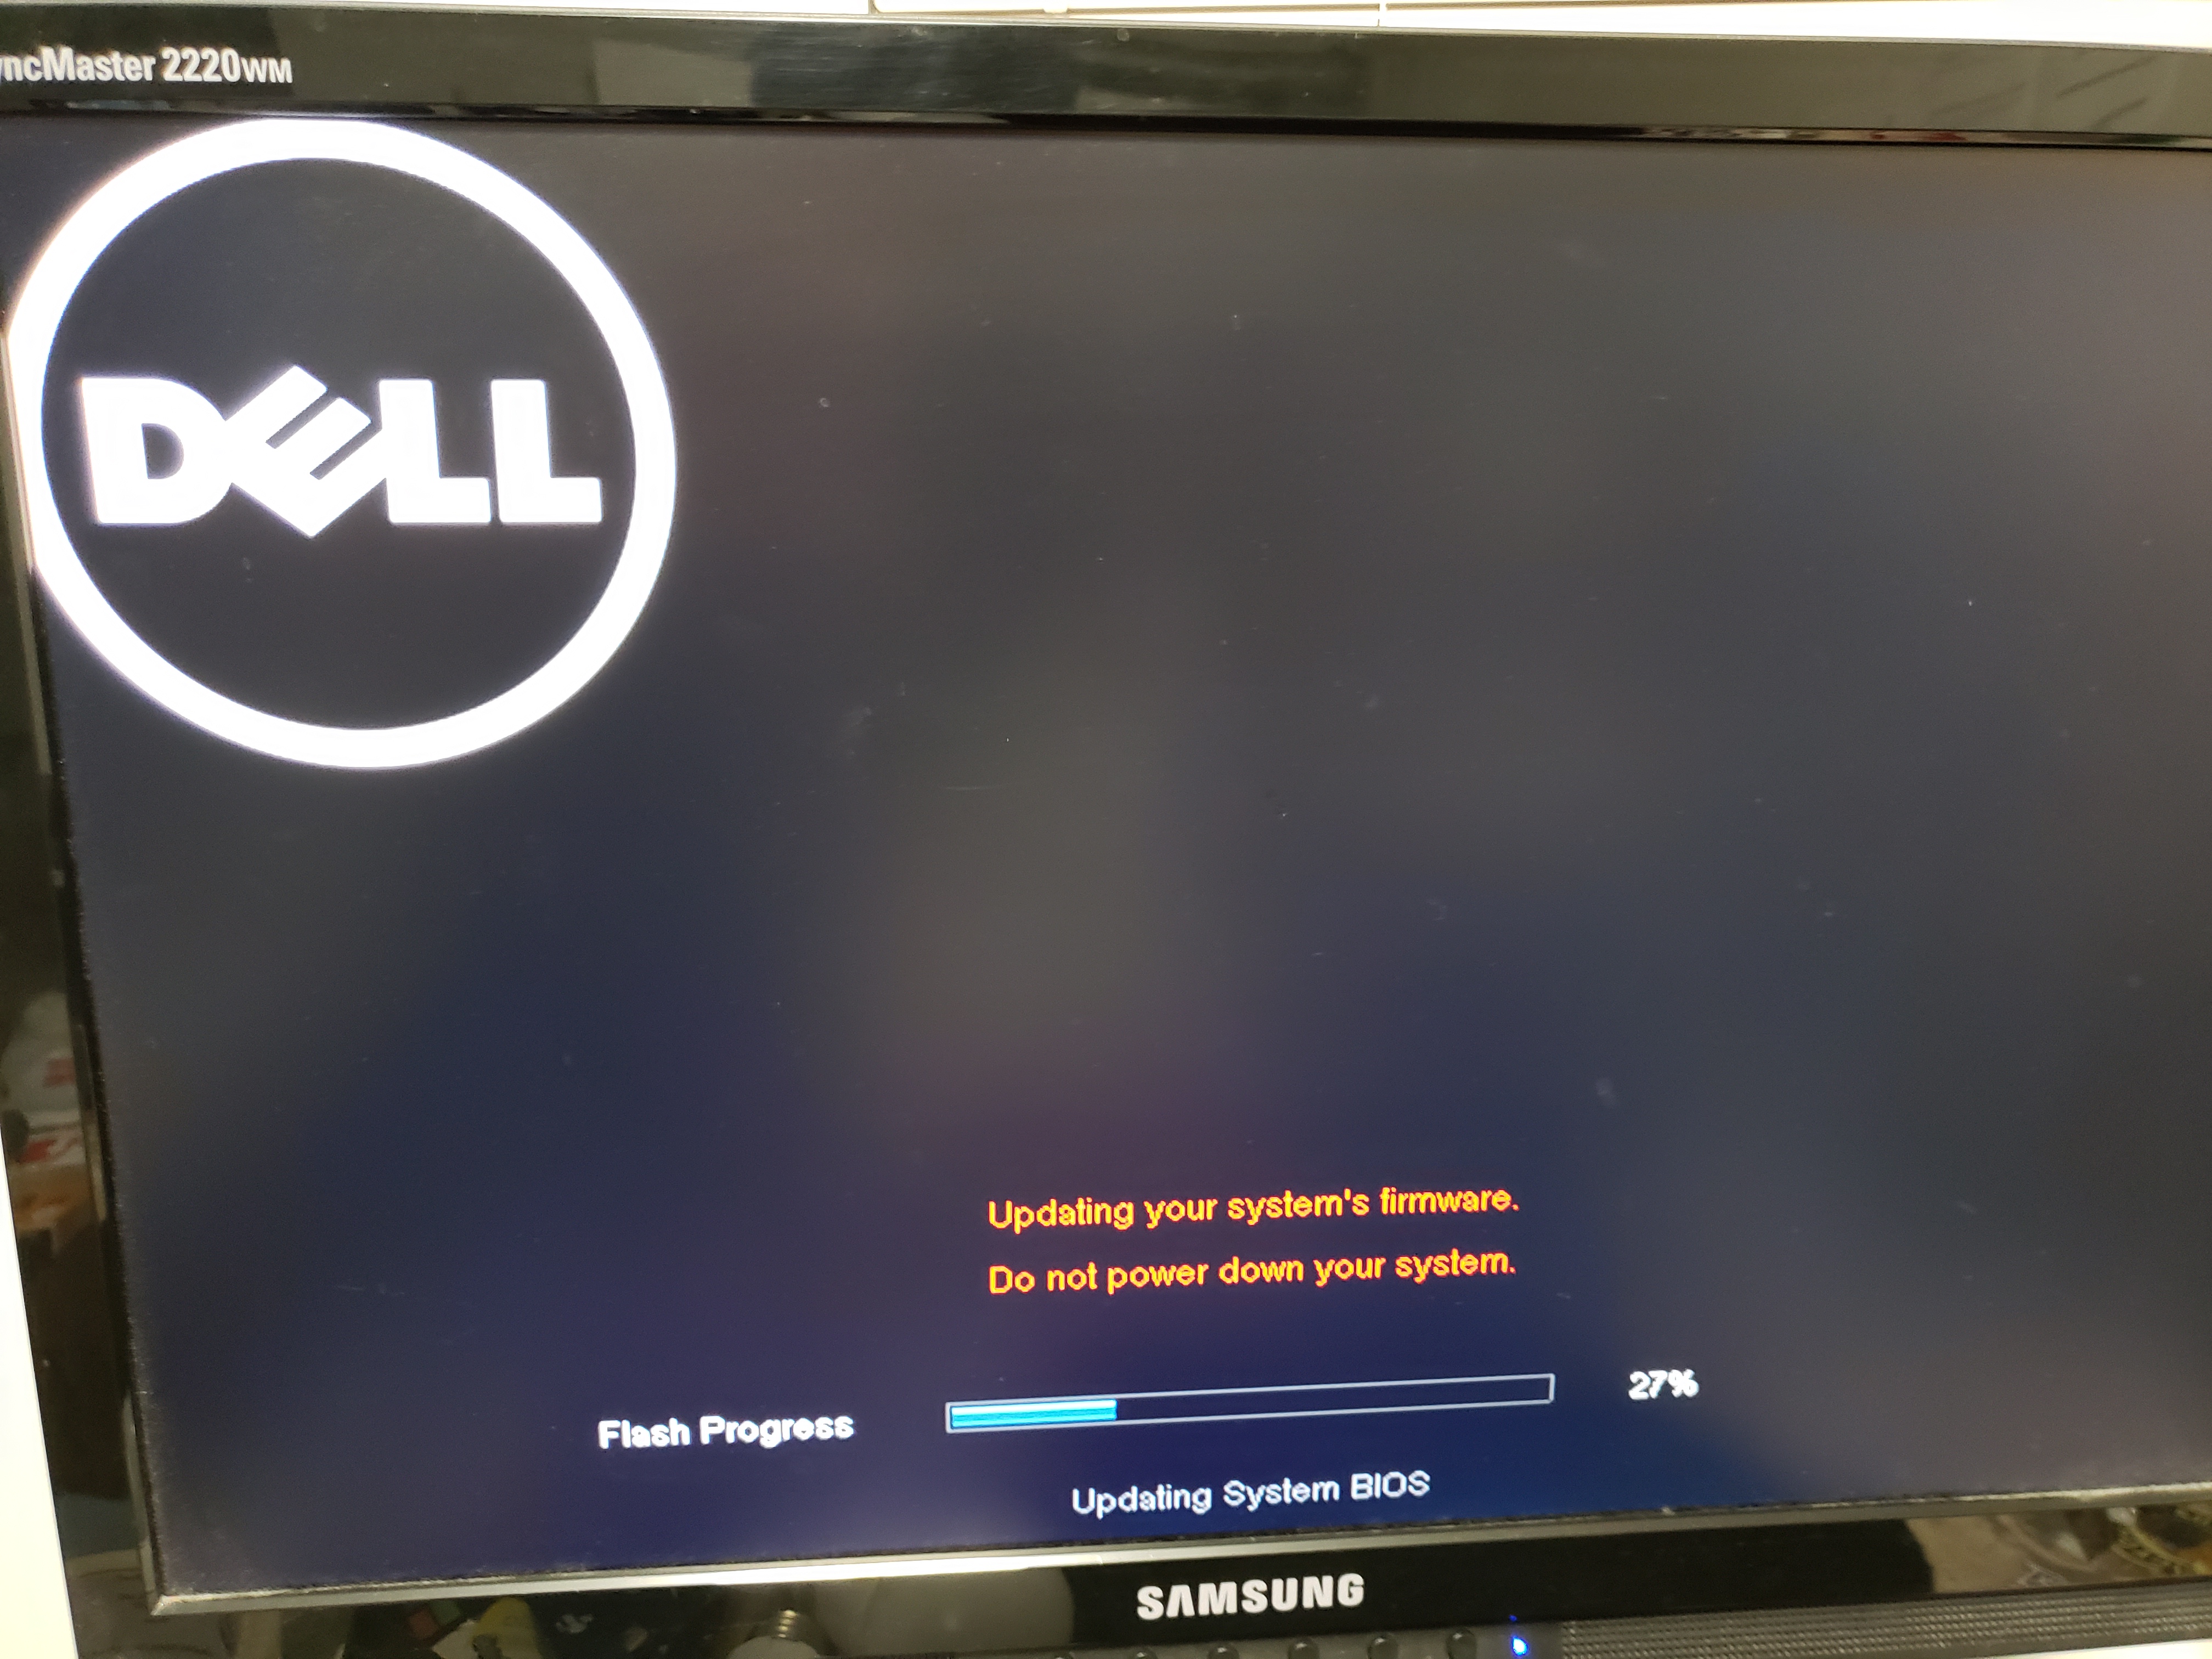 Dell motherboard BIOS firmware update